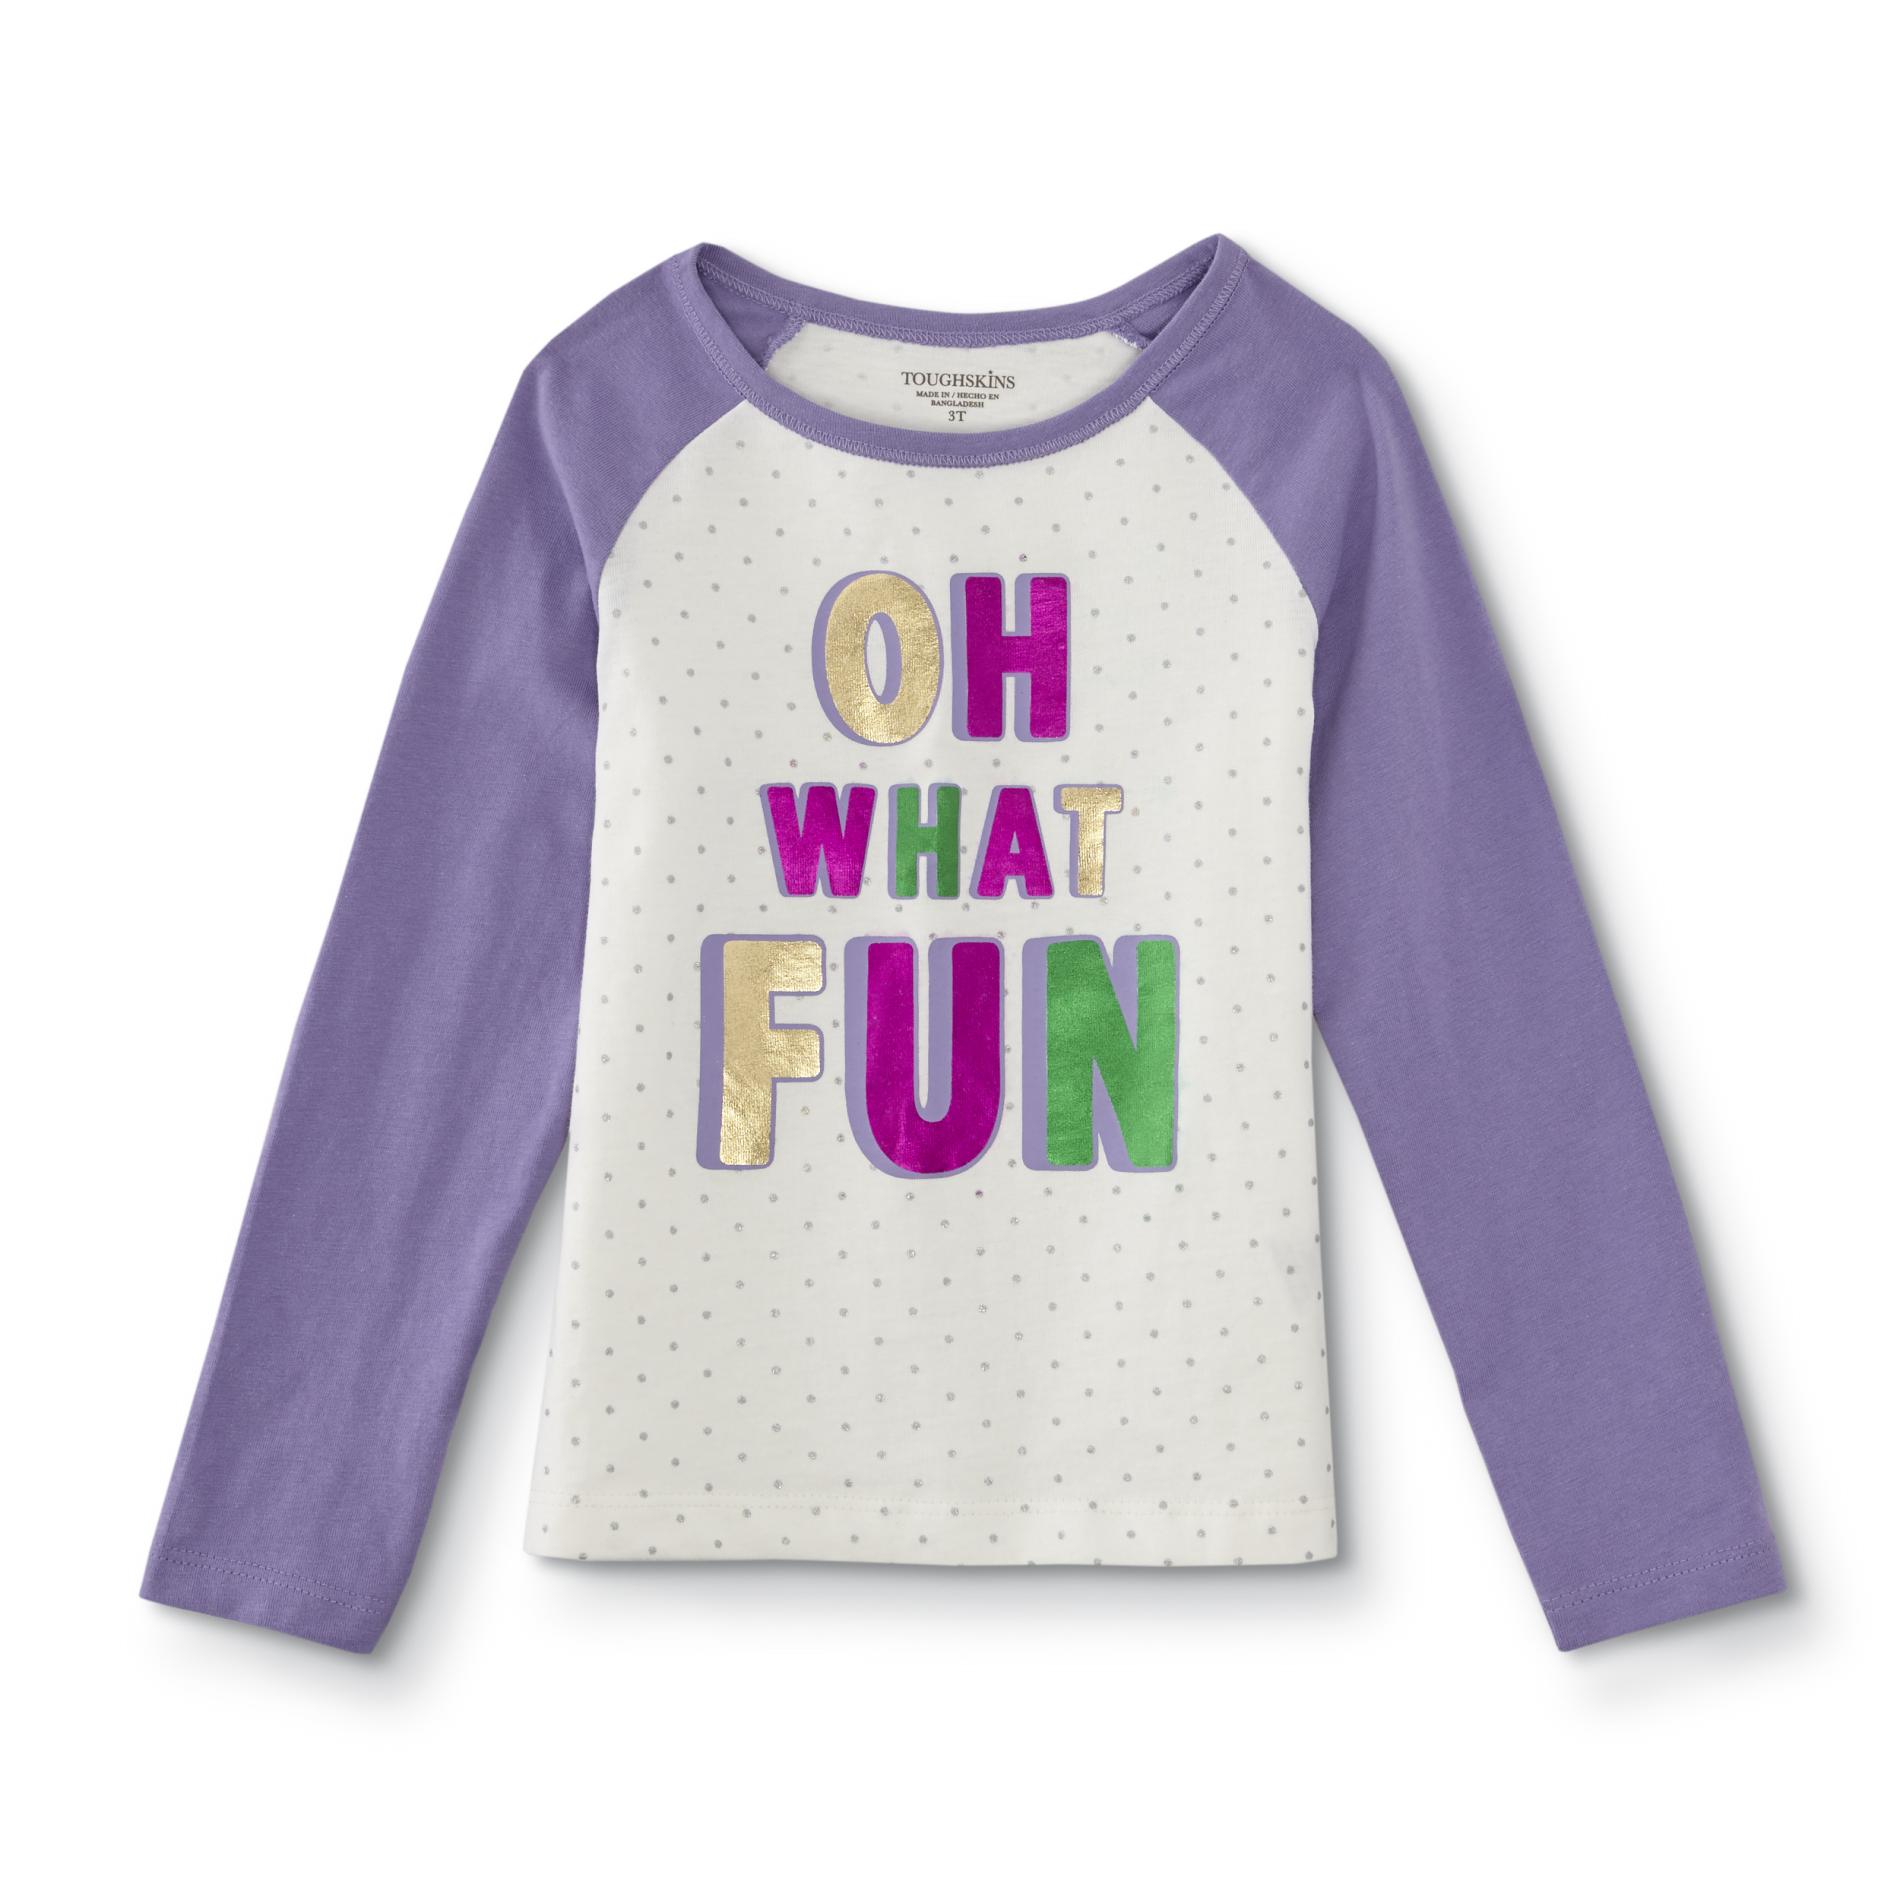 Toughskins Infant & Toddler Girls' Graphic Shirt - Oh What Fun